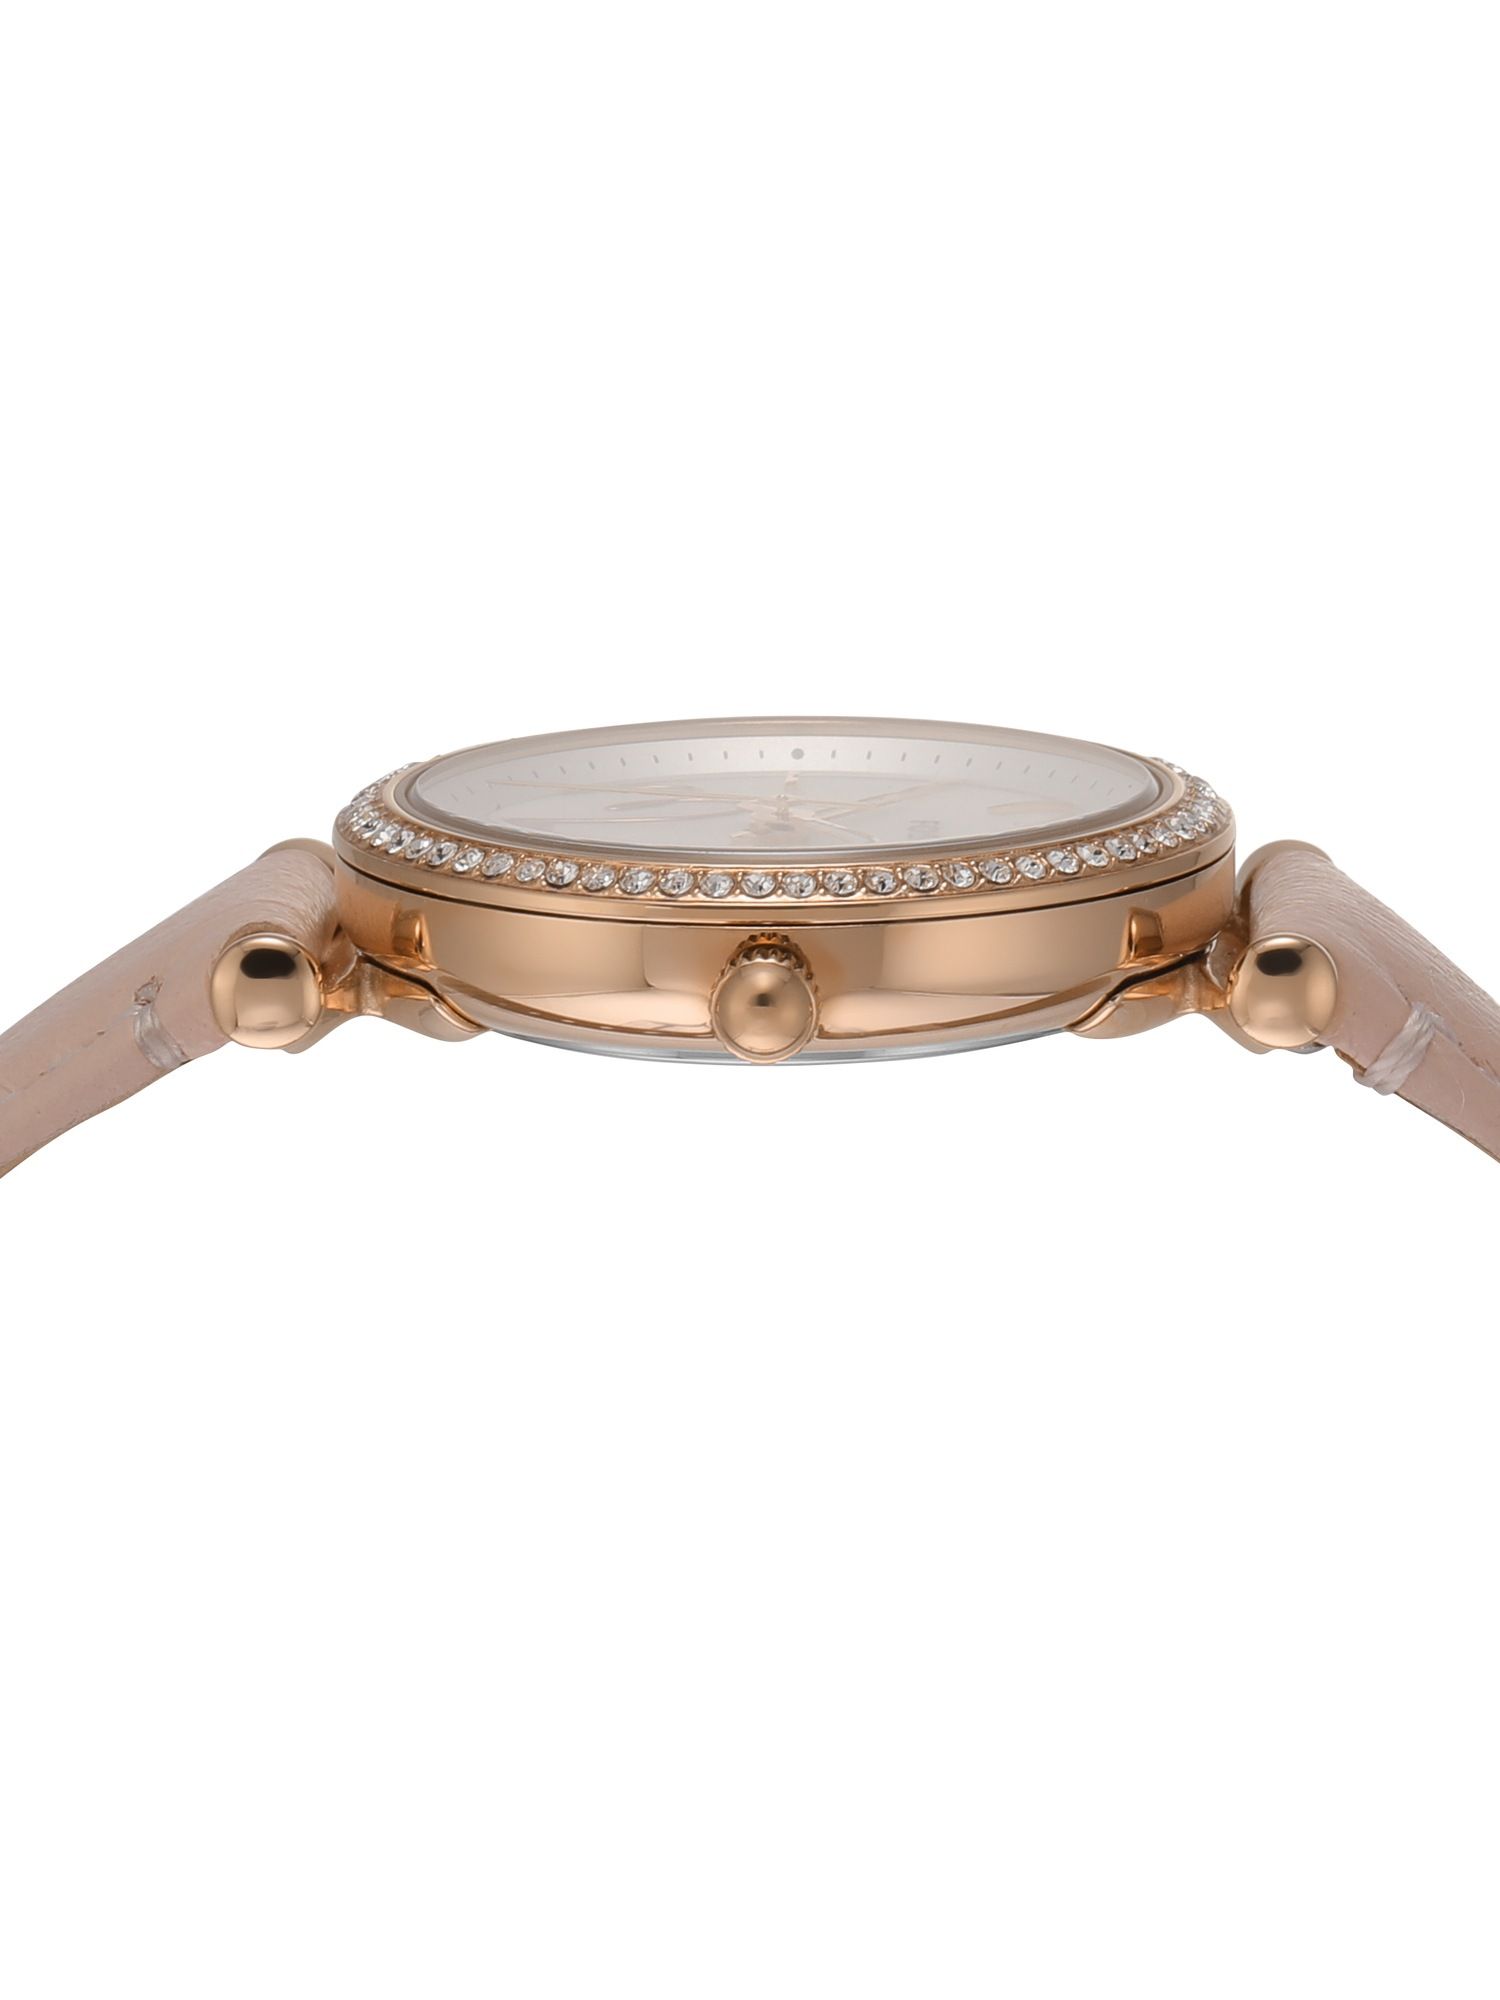 Fossil Carlie Pink Watch Es5268: Buy Fossil Carlie Pink Watch